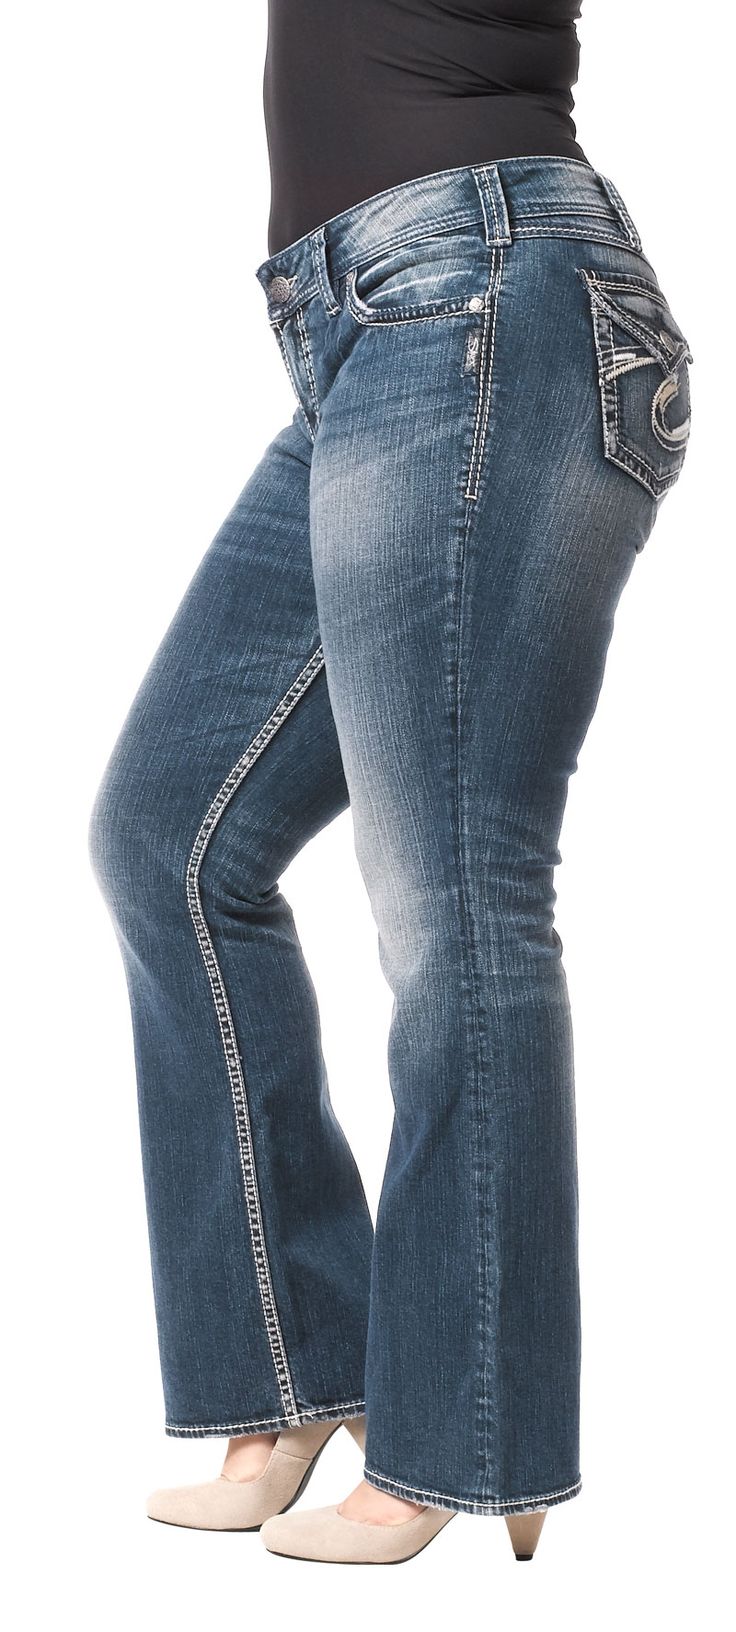 Plus size miss me jeans 5 best outfits curvyoutfits.com